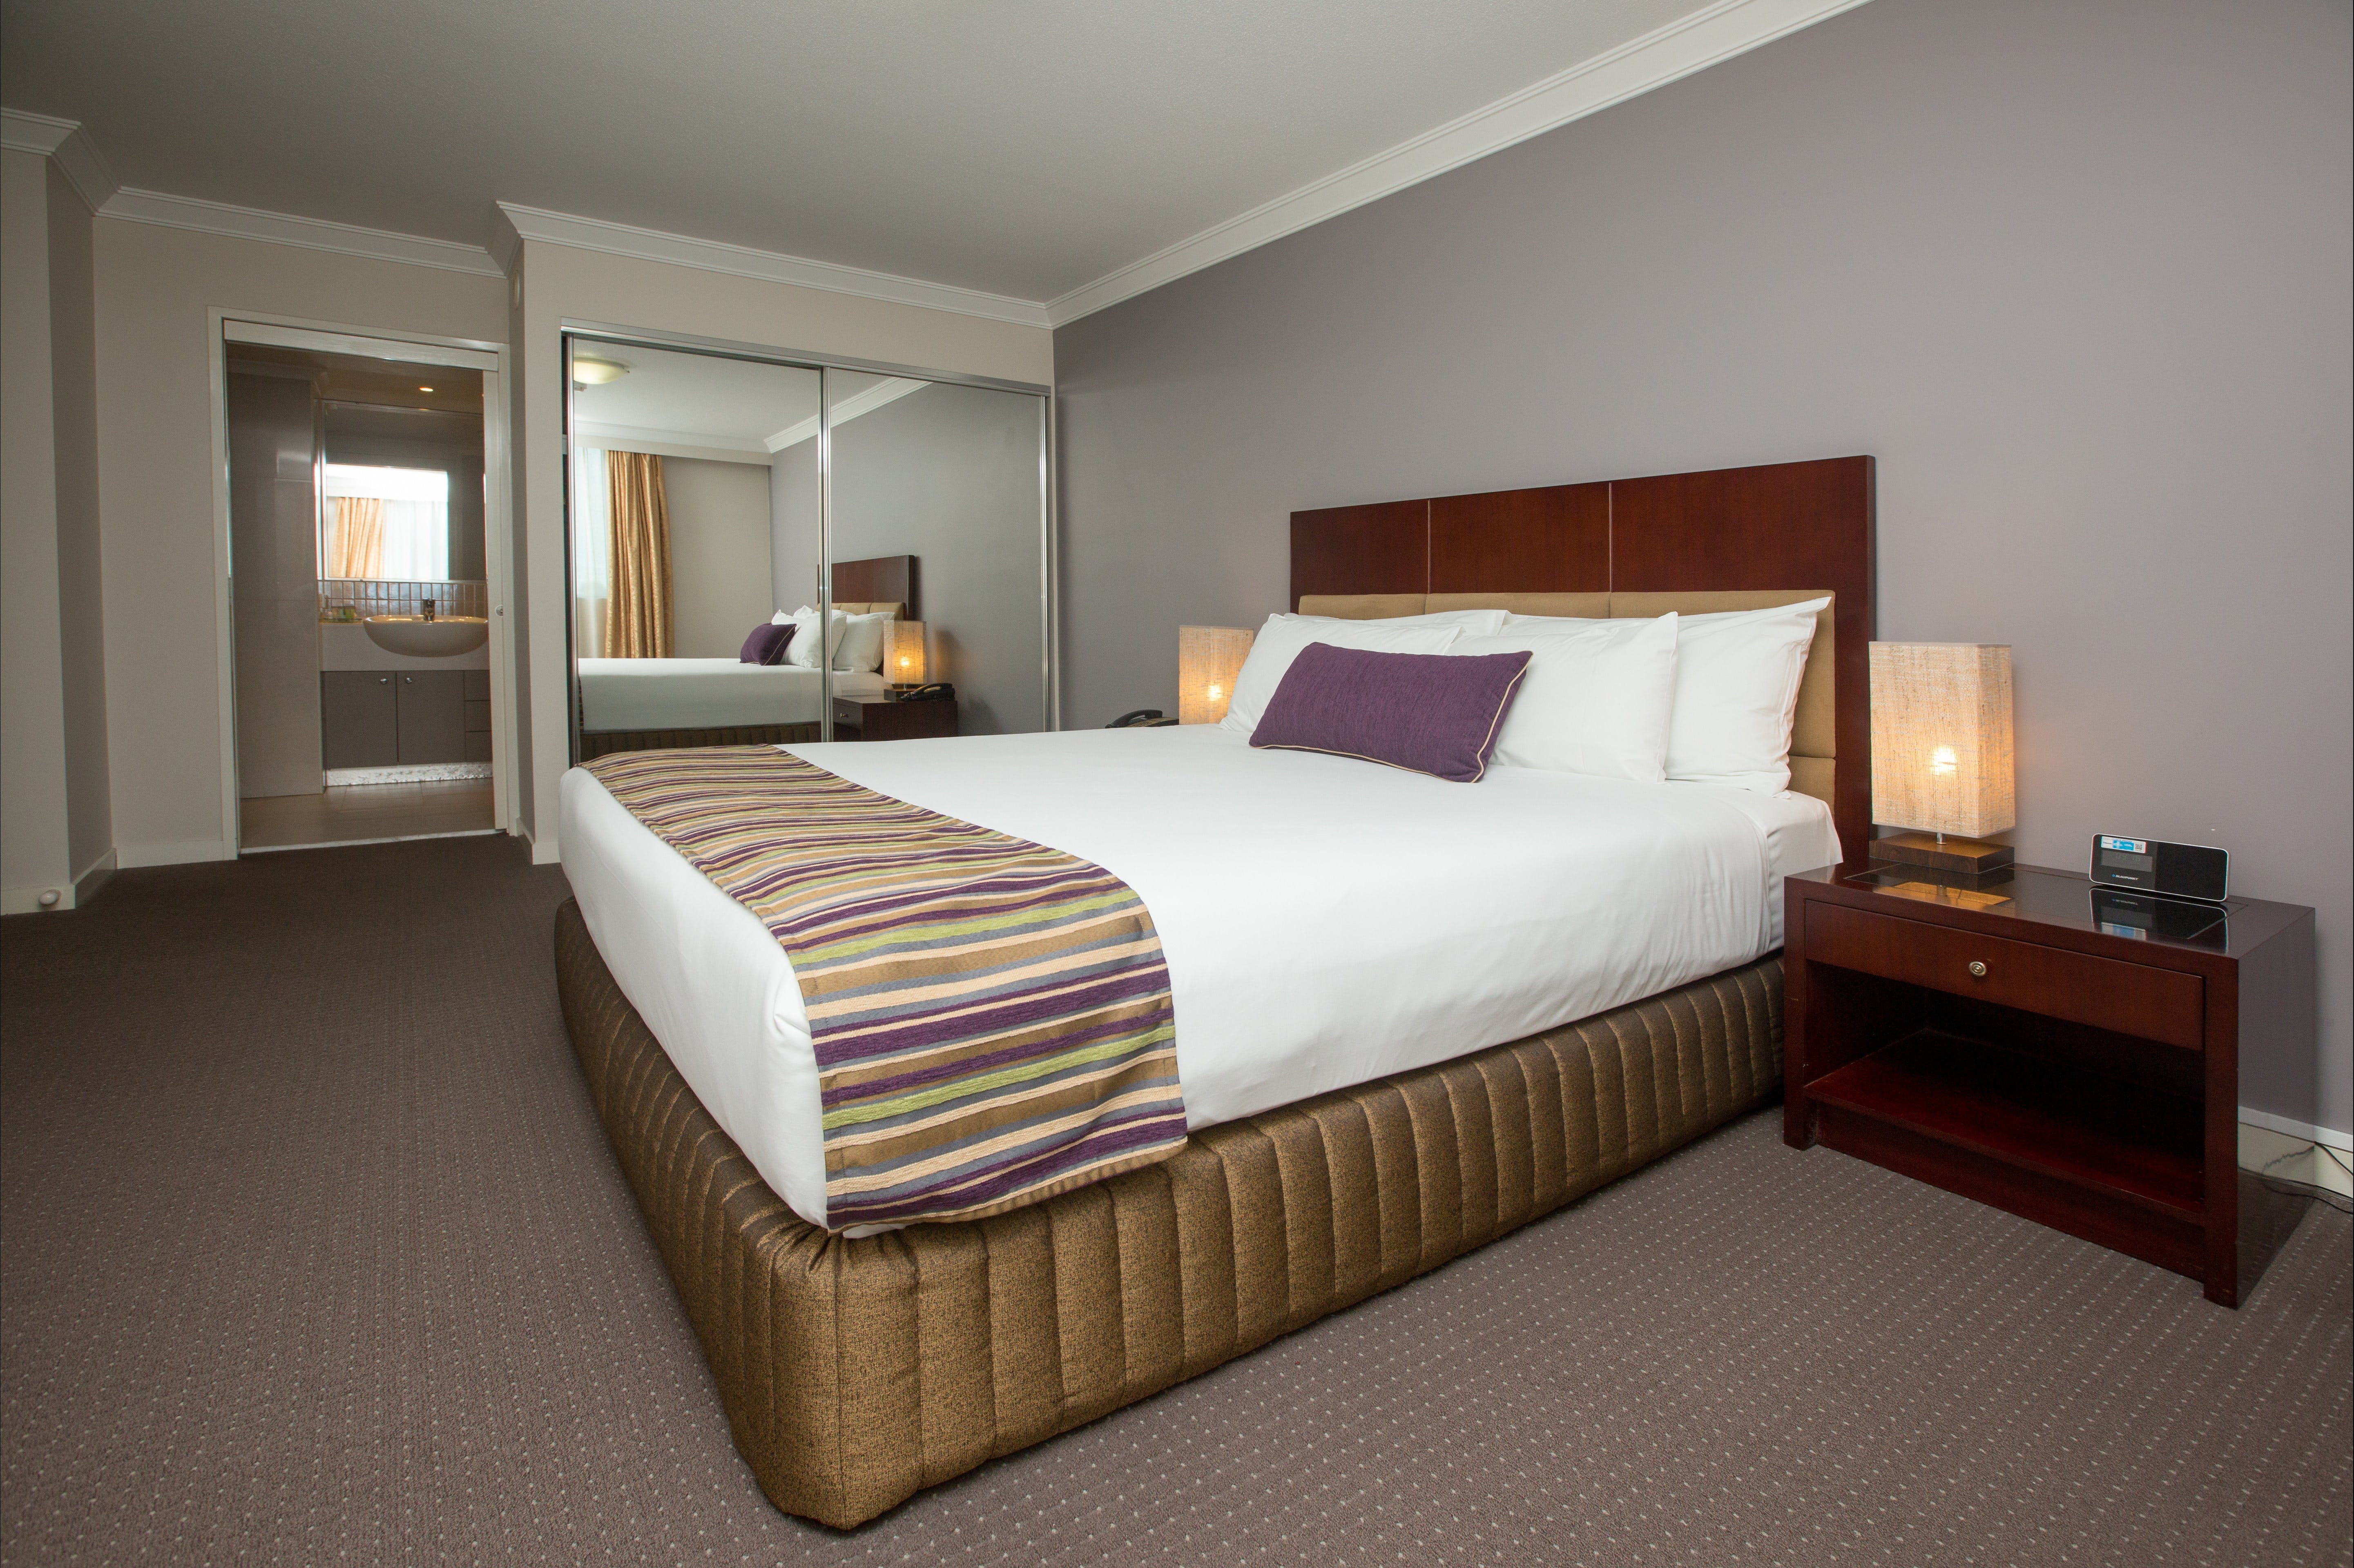 Hotel Gloria - Accommodation Perth